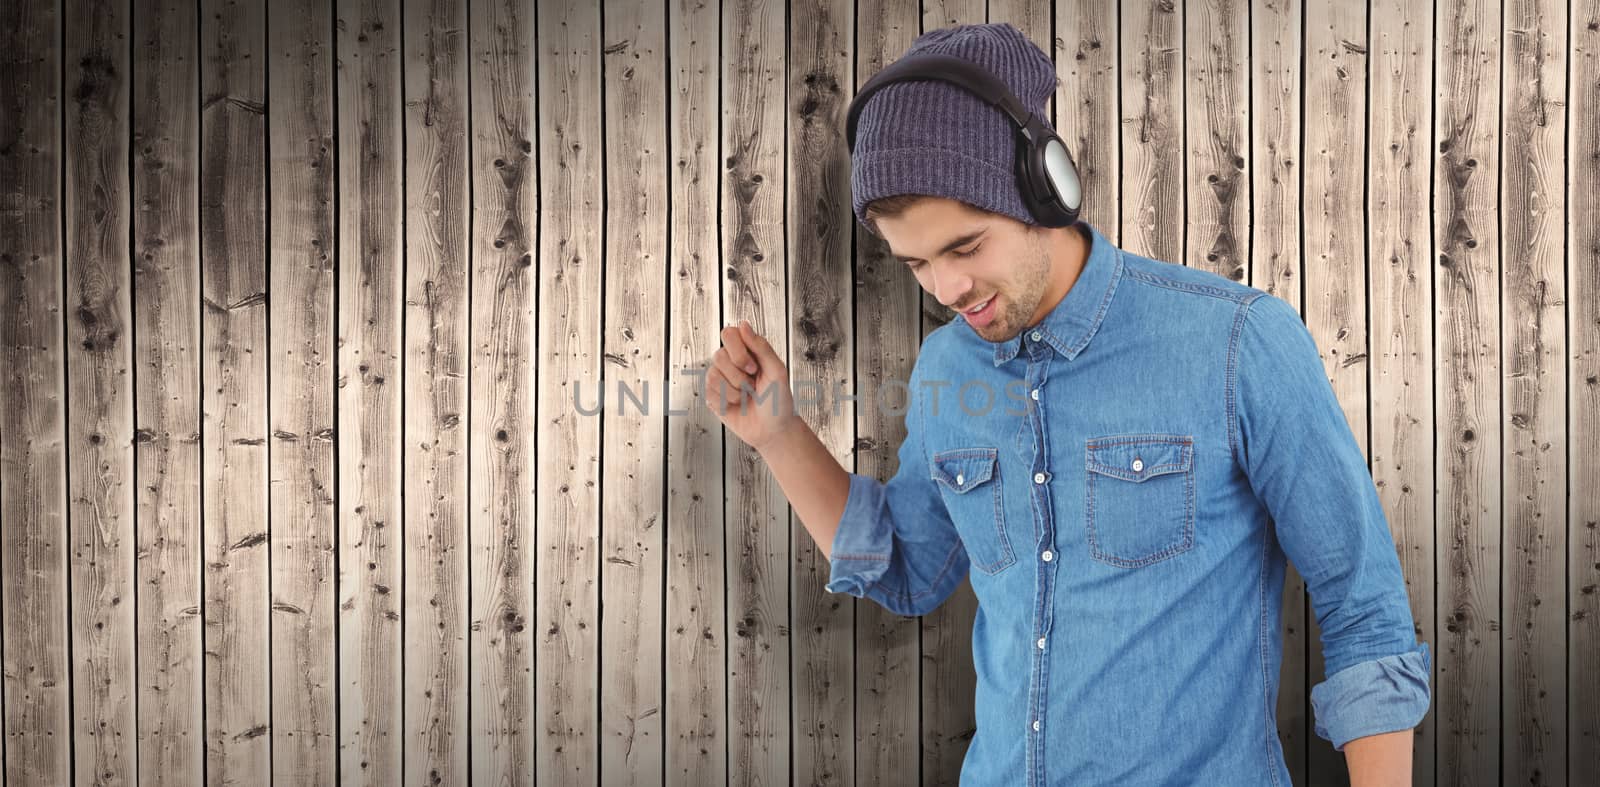 Hipster wearing headphones enjoying music against wooden planks background